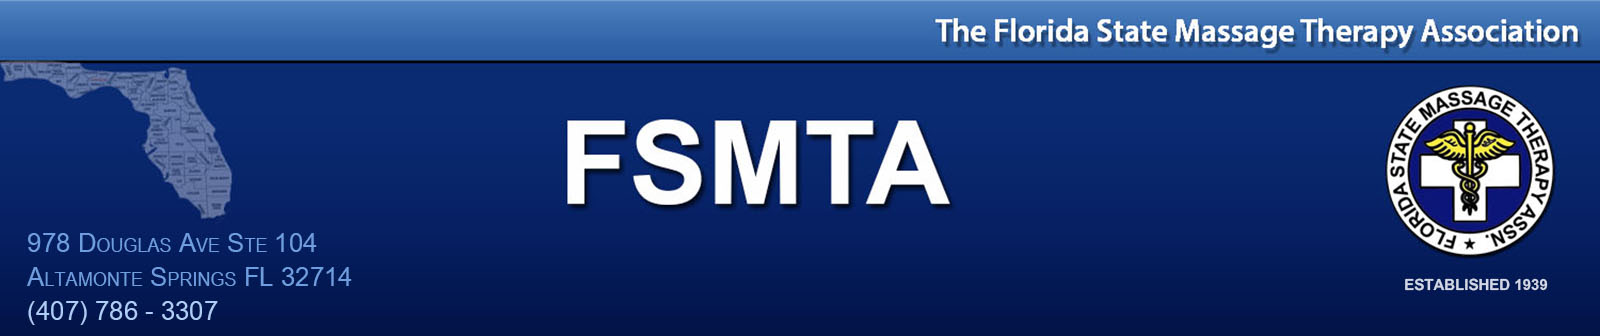 FSMTA National Convention Banner